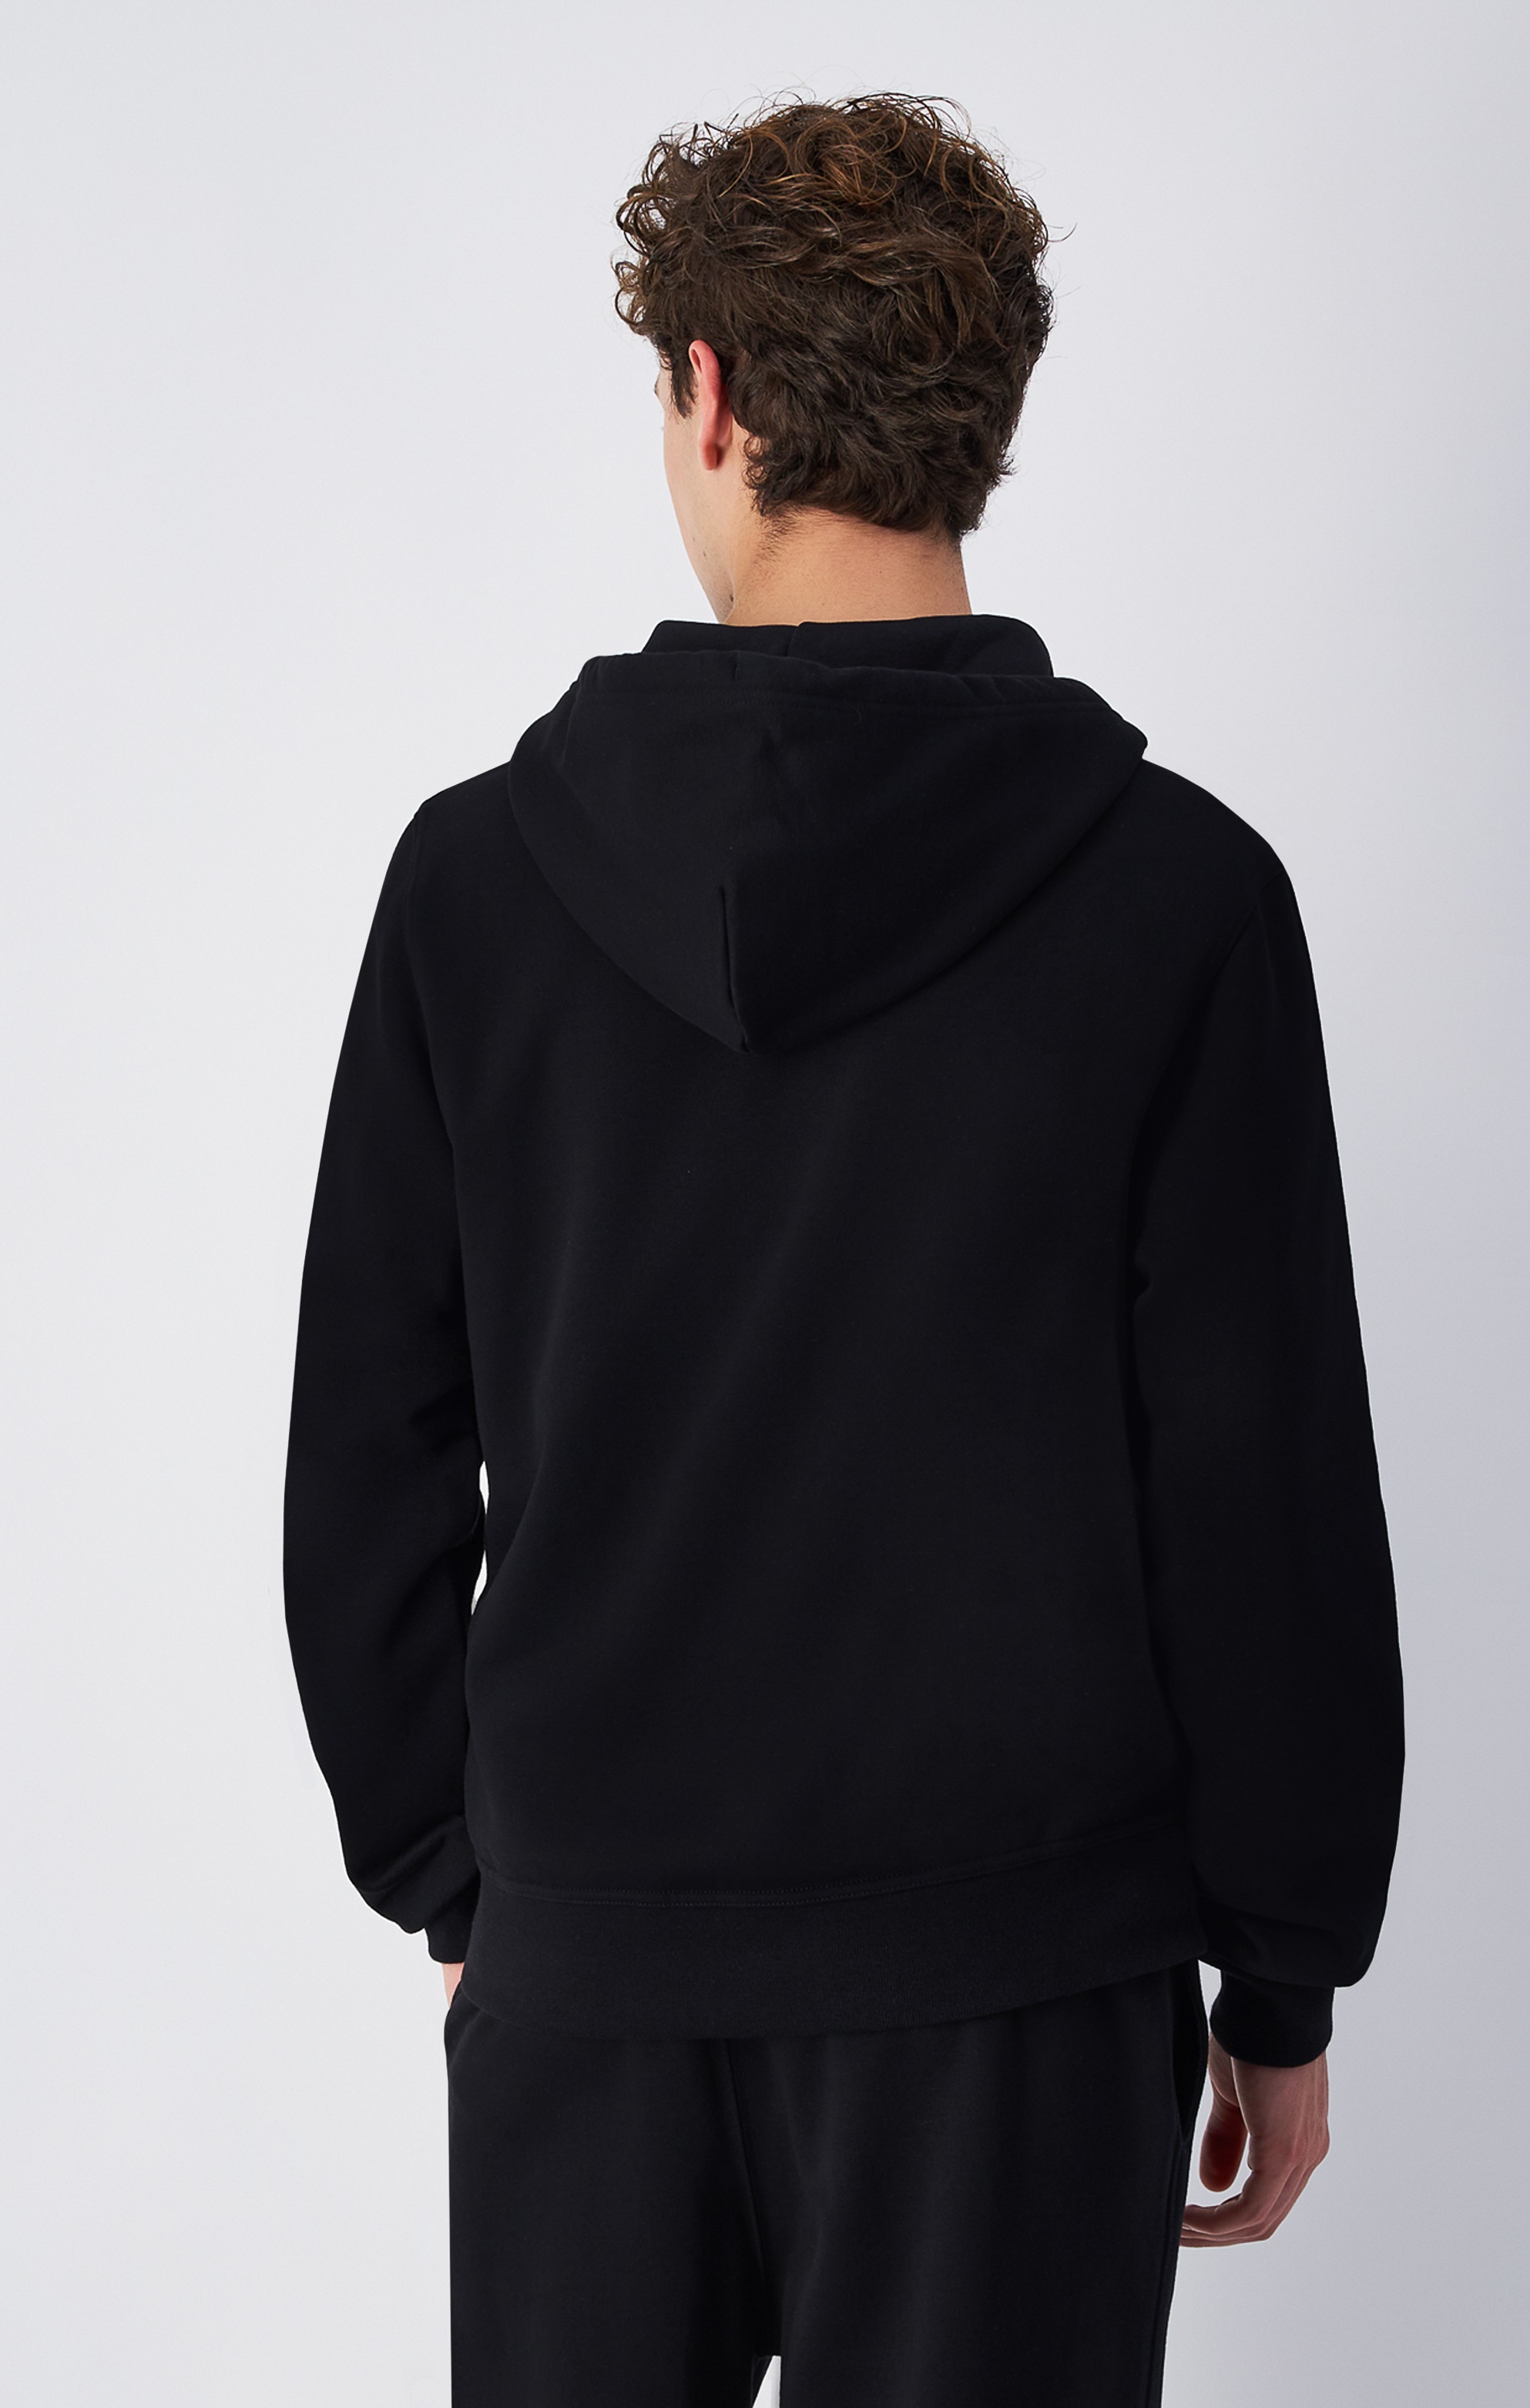 Champion Kapuzensweatjacke "Hooded Full Zip Sweatshirt" günstig online kaufen